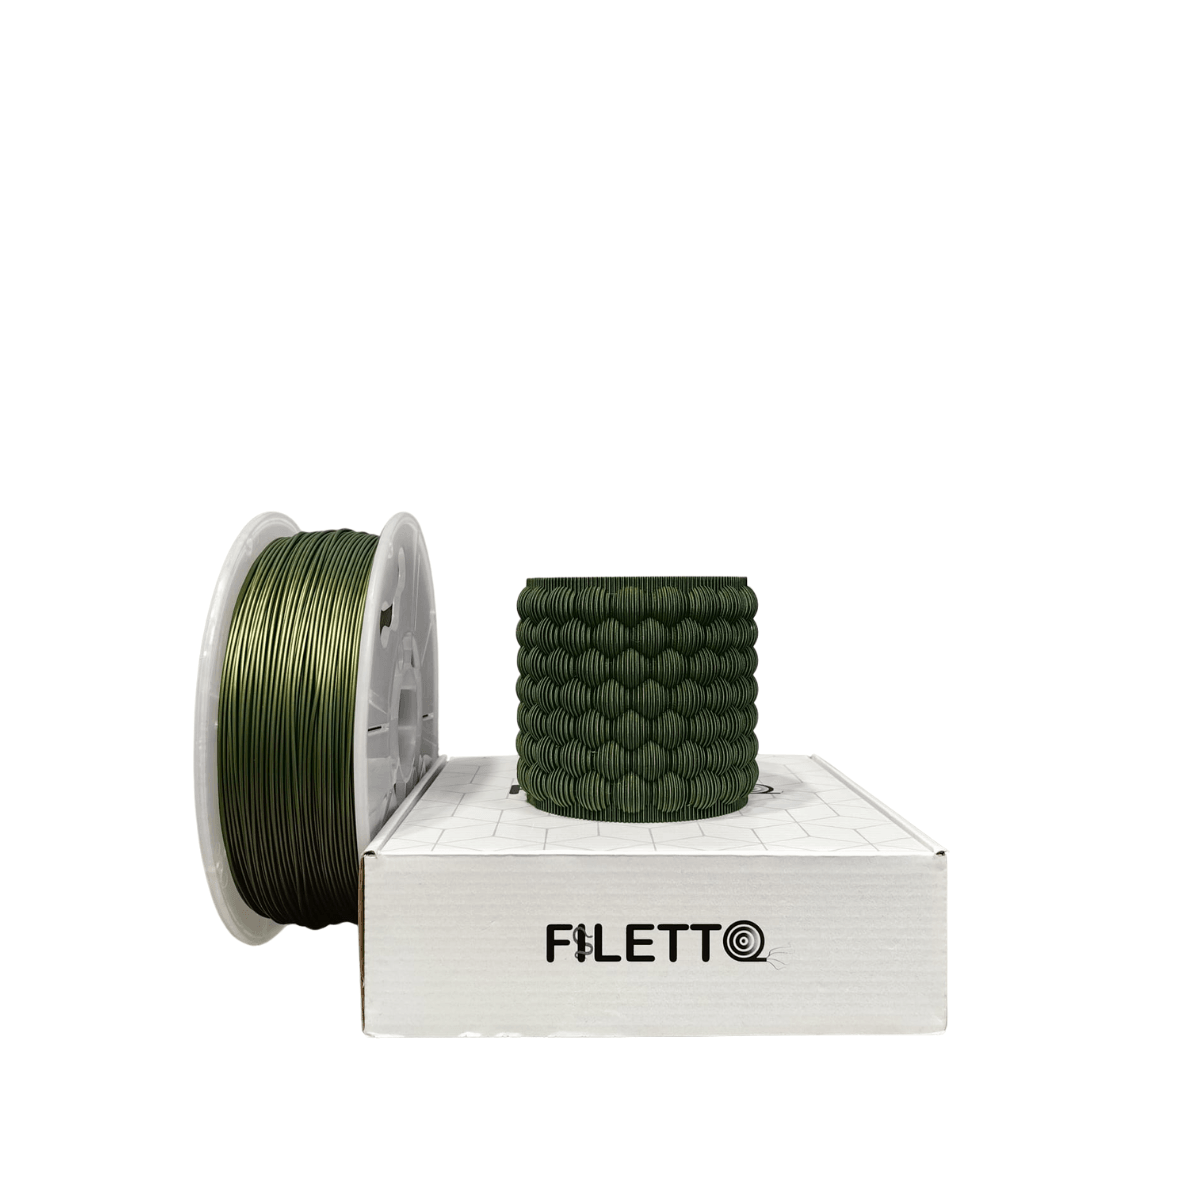 Filetto Pla+ Filament 1.75mm 1KG - Khaki Green